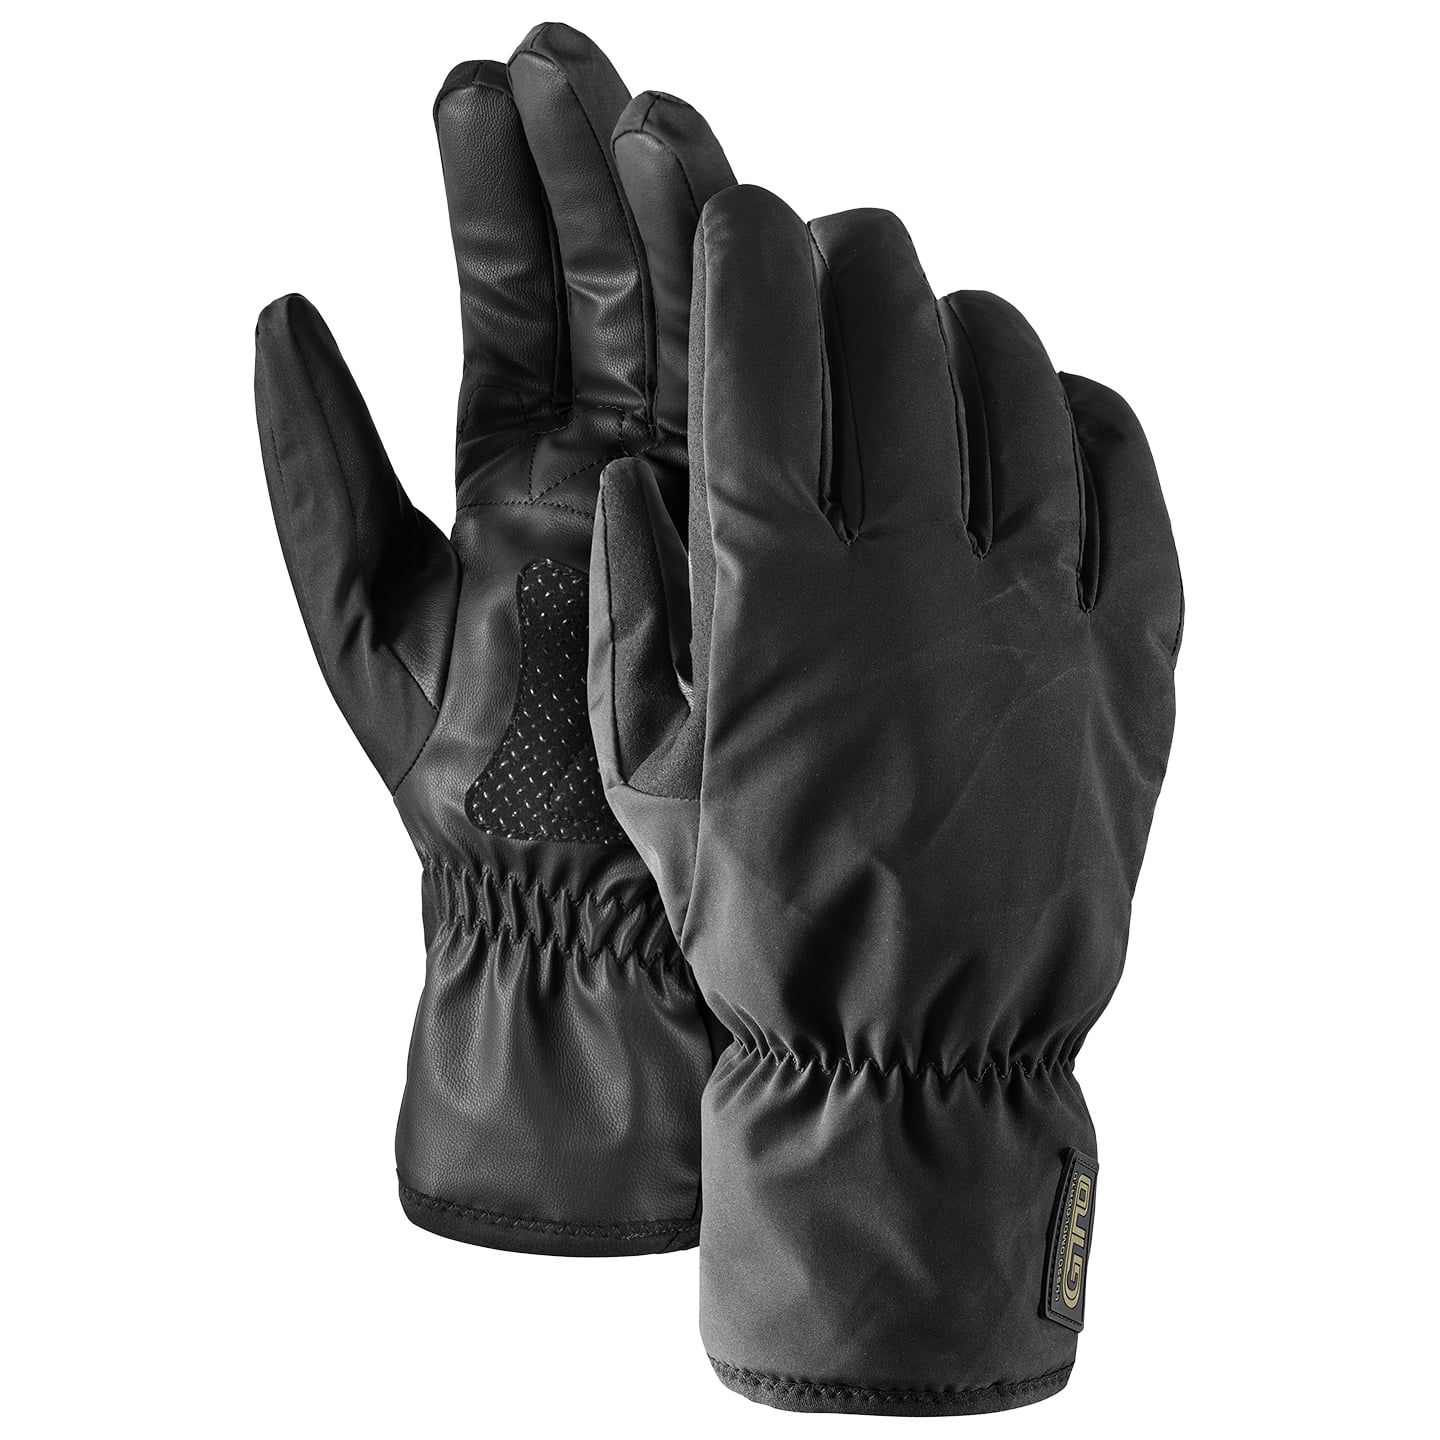 ASSOS Winter Gloves GTO Ultraz Winter Cycling Gloves, for men, size S, Cycling gloves, Cycling clothing